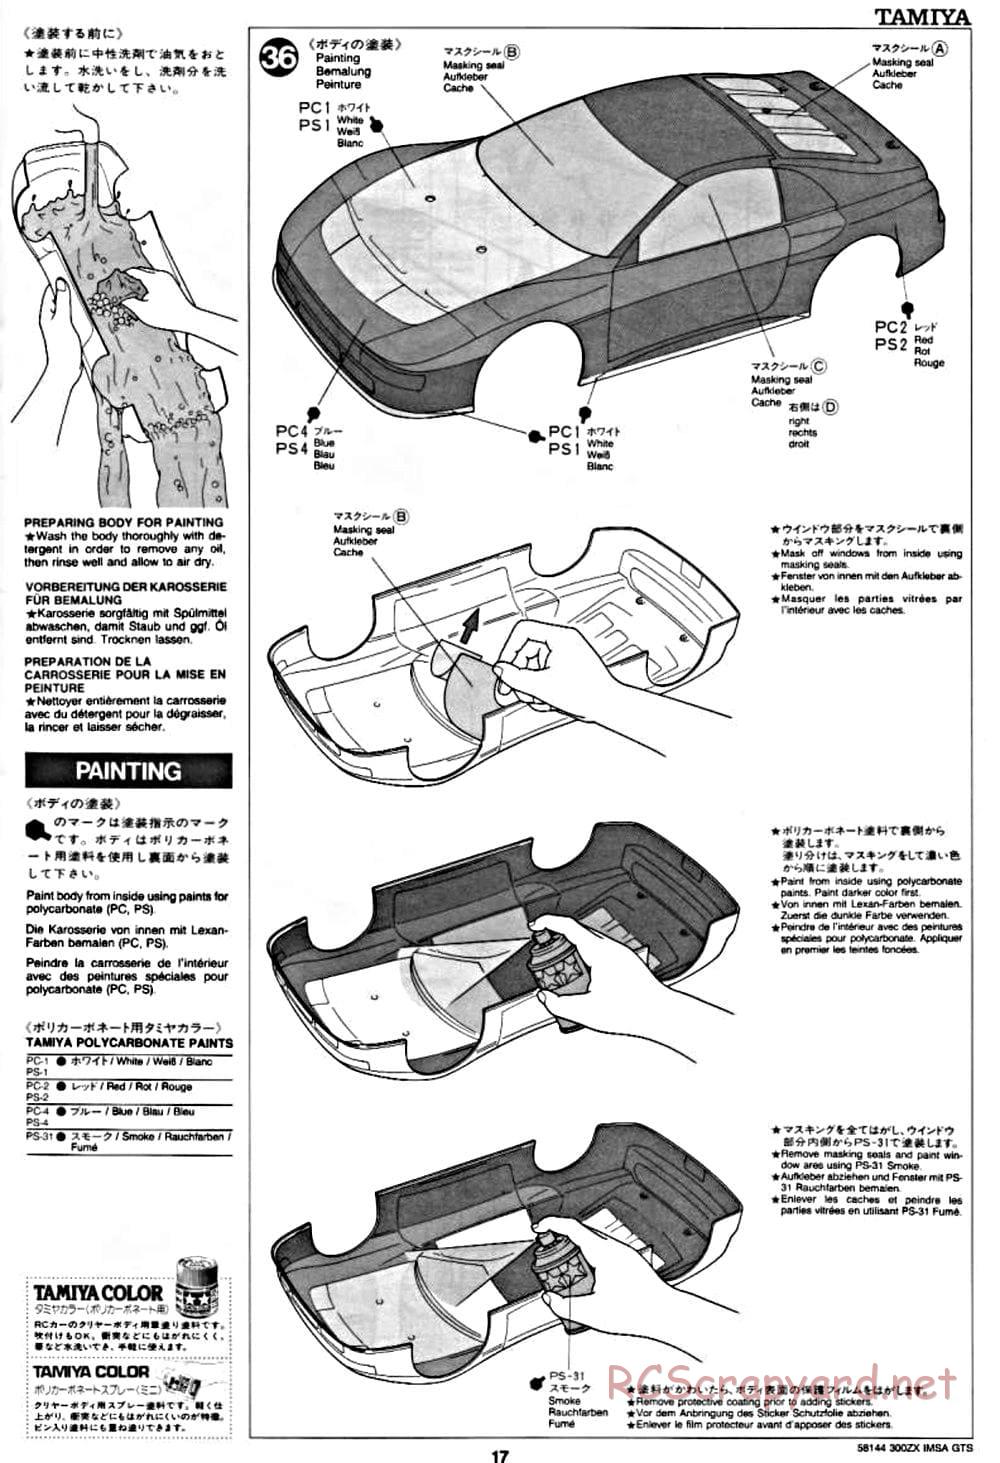 Tamiya - Nissan 300ZX IMSA-GTS - TA-02W Chassis - Manual - Page 17